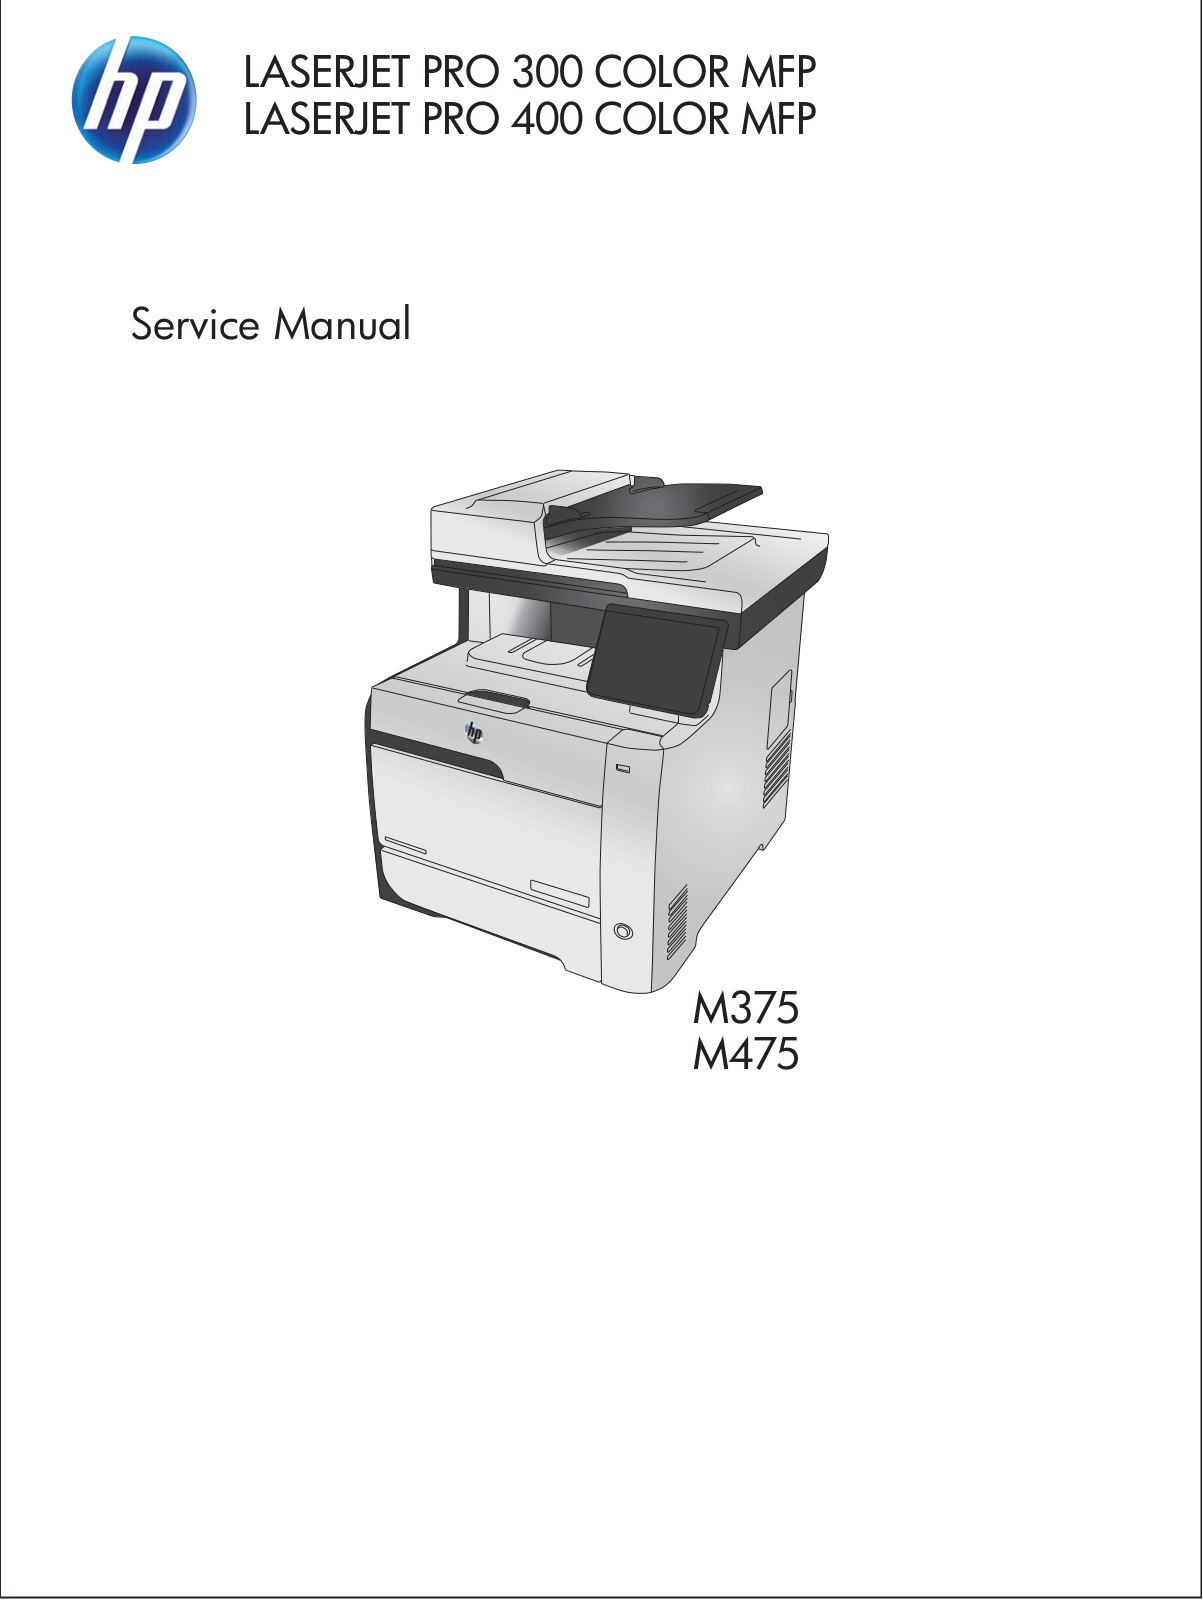 HP LaserJet Pro 300 color MFP M375, LaserJet Pro 400 color MFP M475 Service Manual